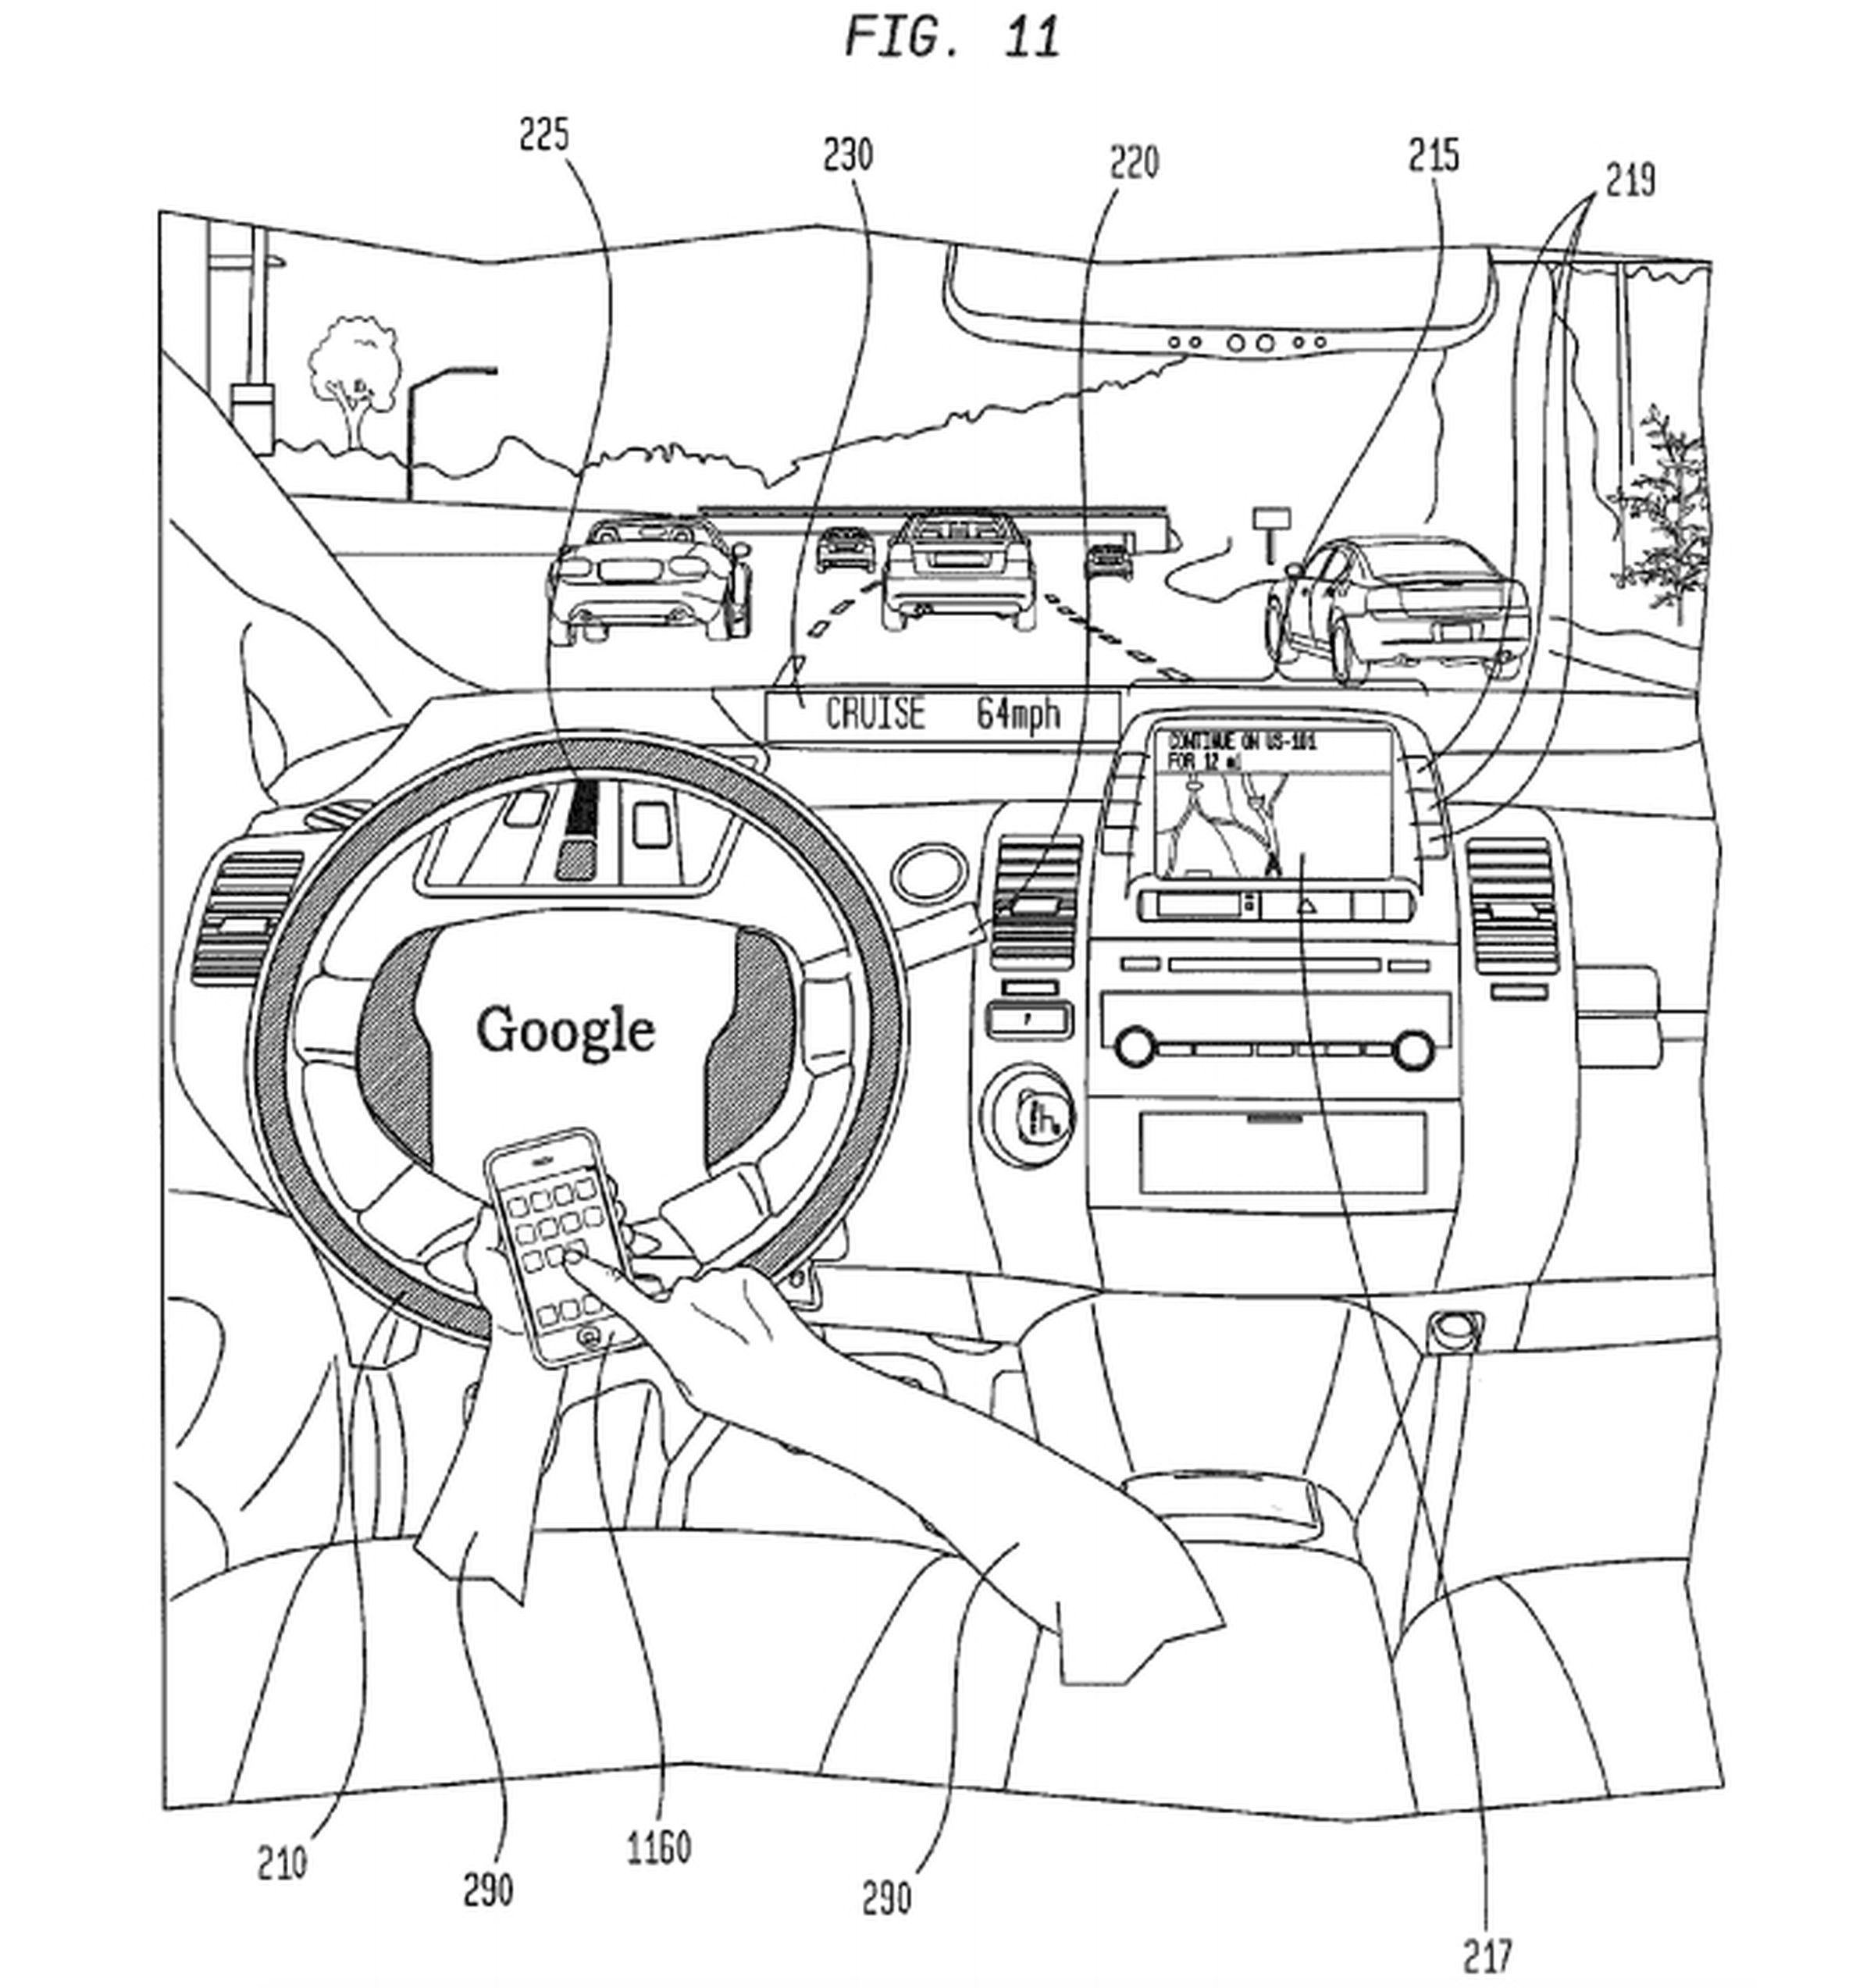 google chauffeur patent